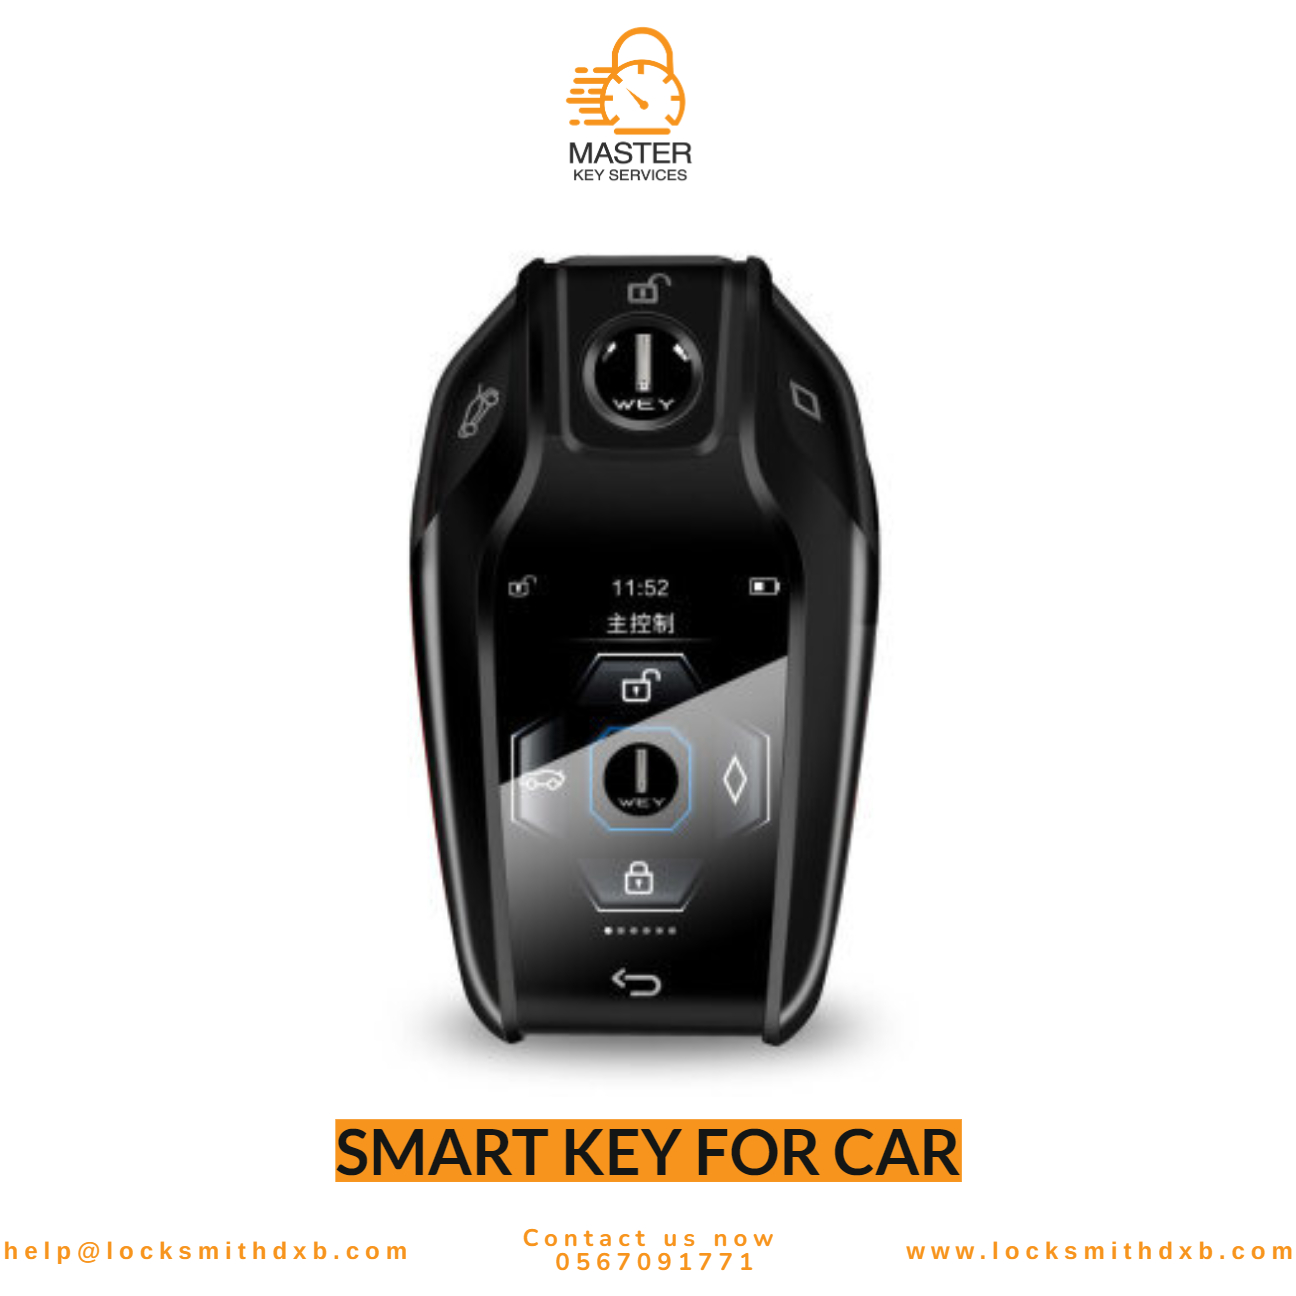 Smart key for car